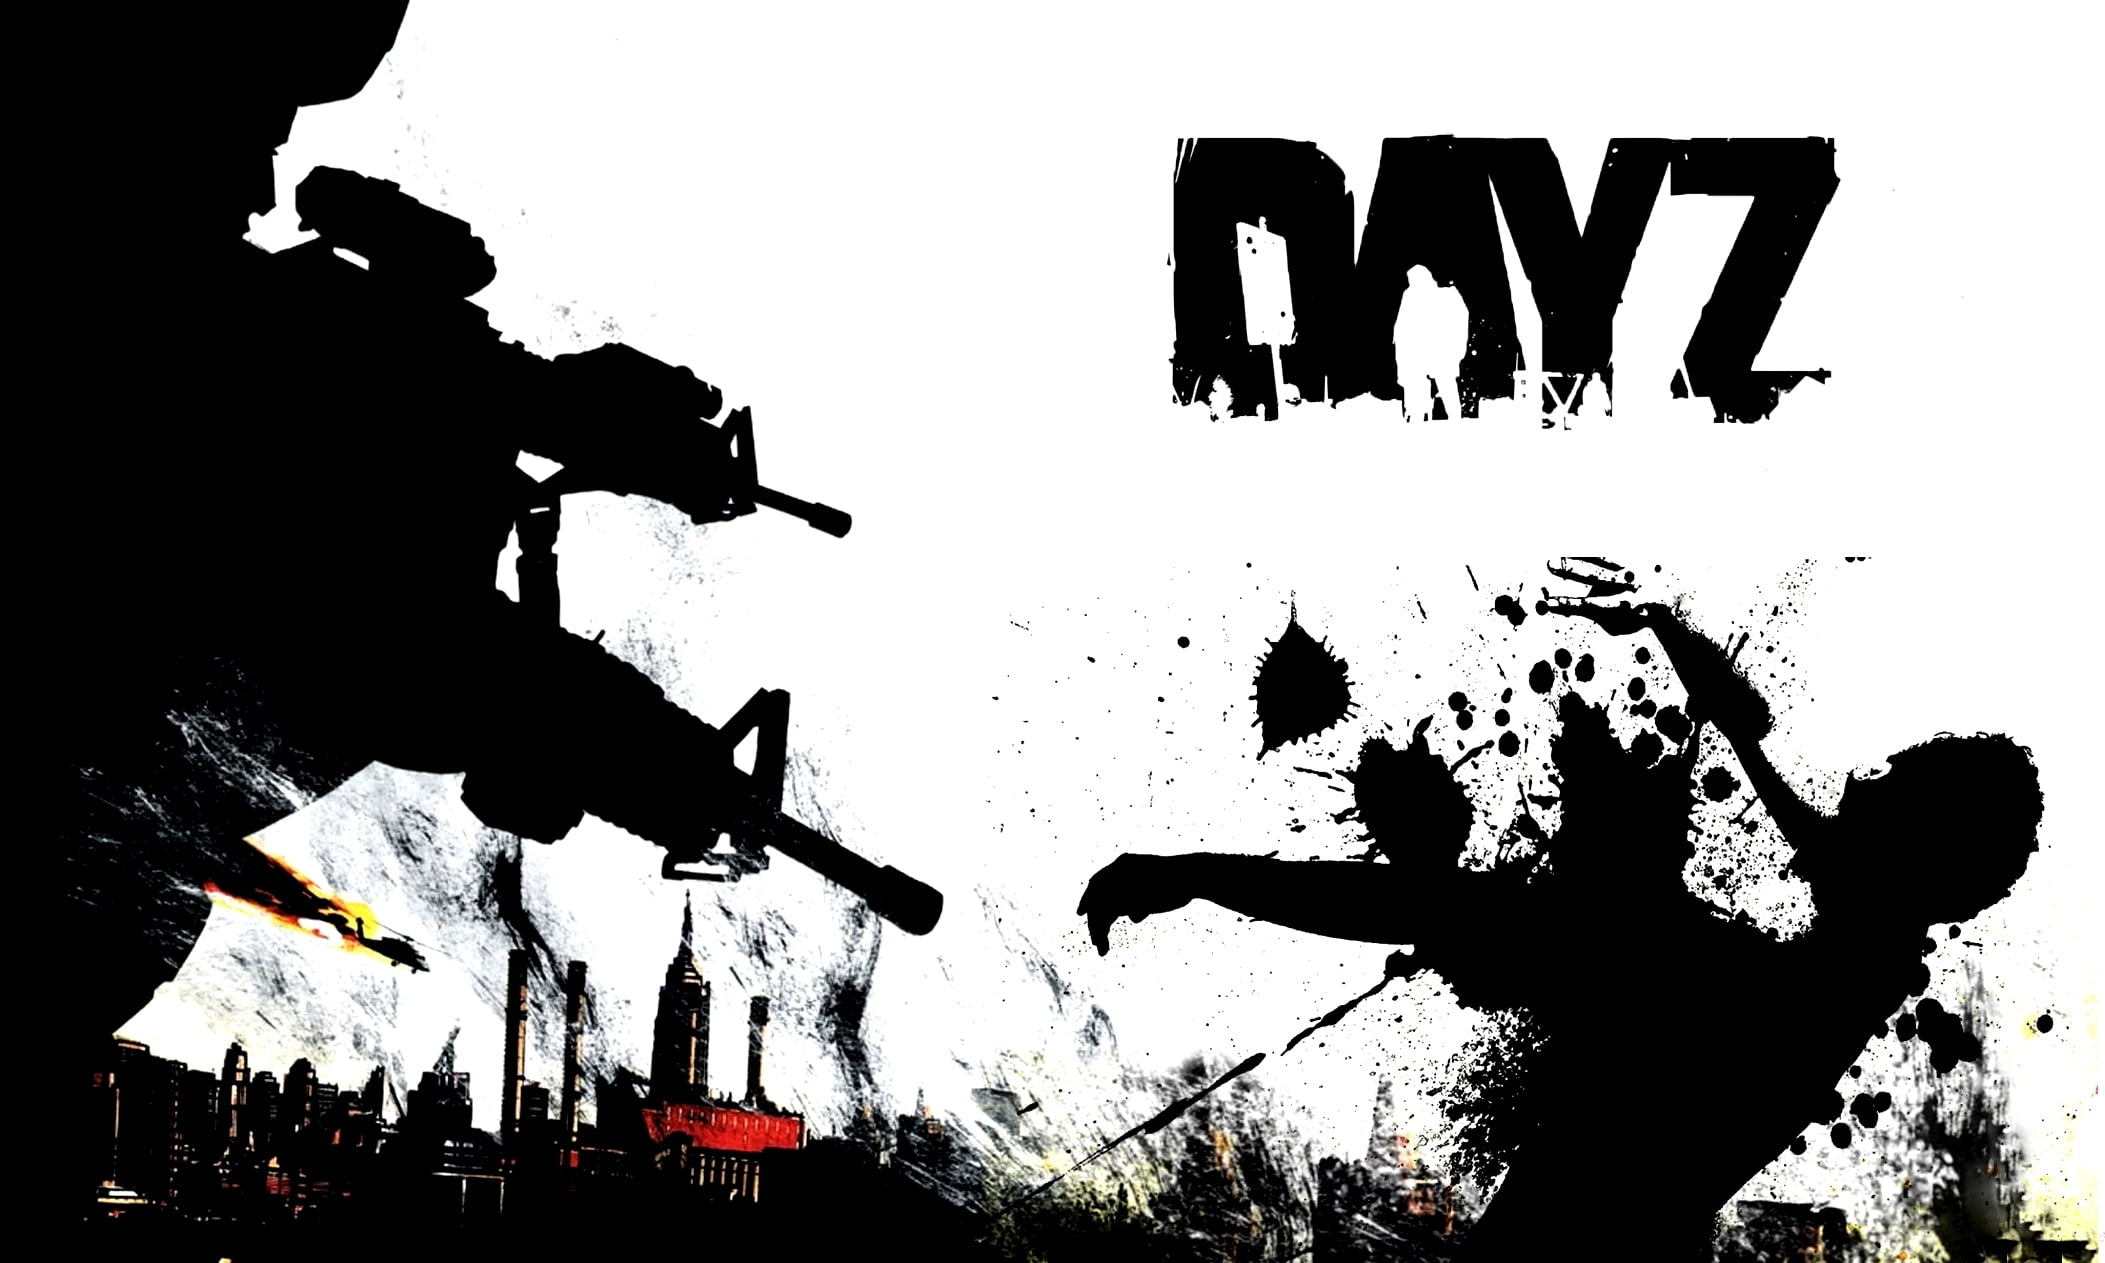 Dayz digital wallpaper, the sky, weapons, war, blood, zombies